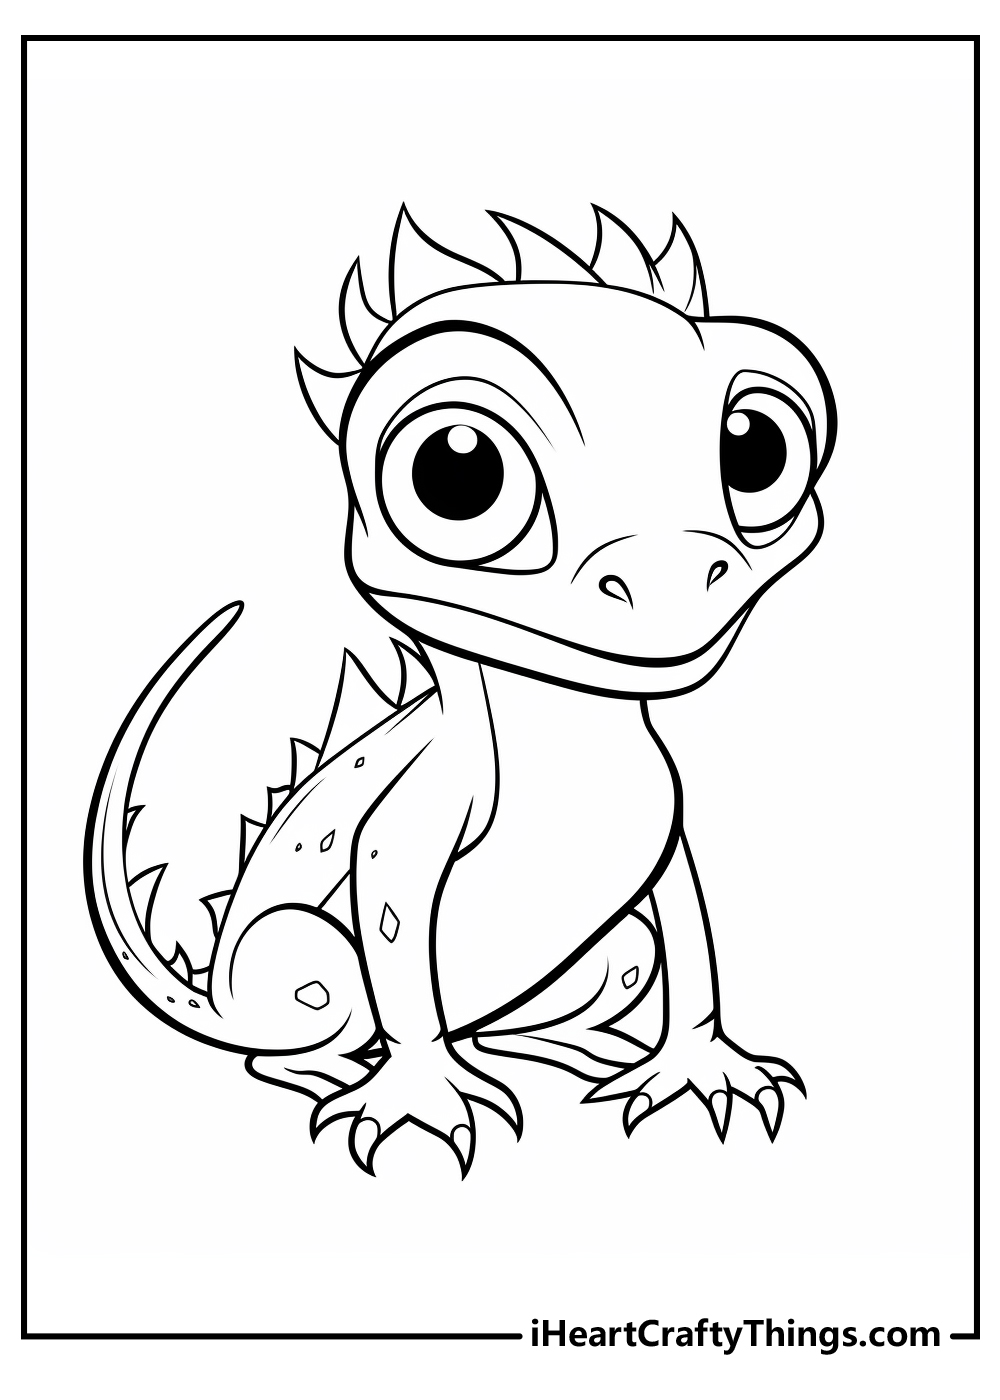 lizard coloring sheet free download